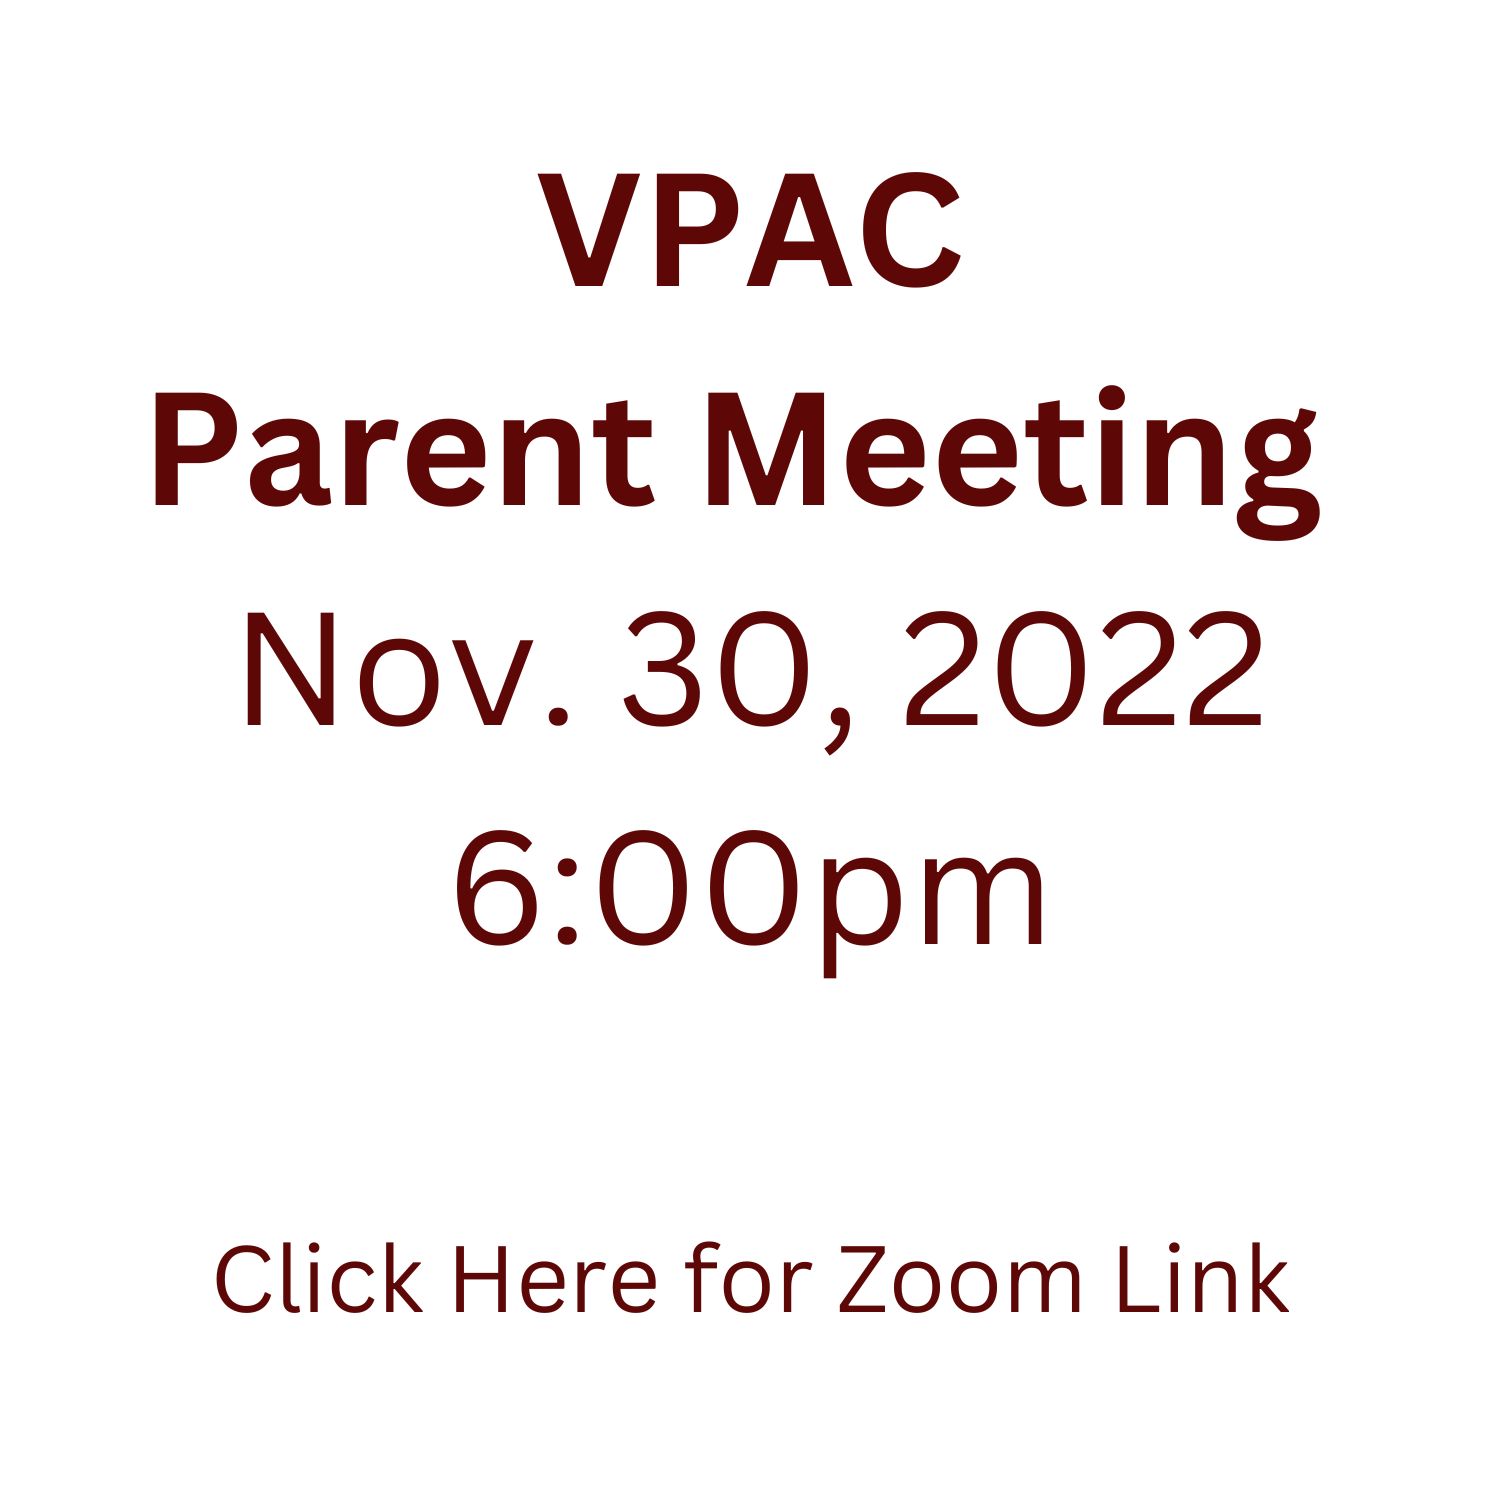 VPAC Parent Meeting  Nov. 30, 2022 6:00pm